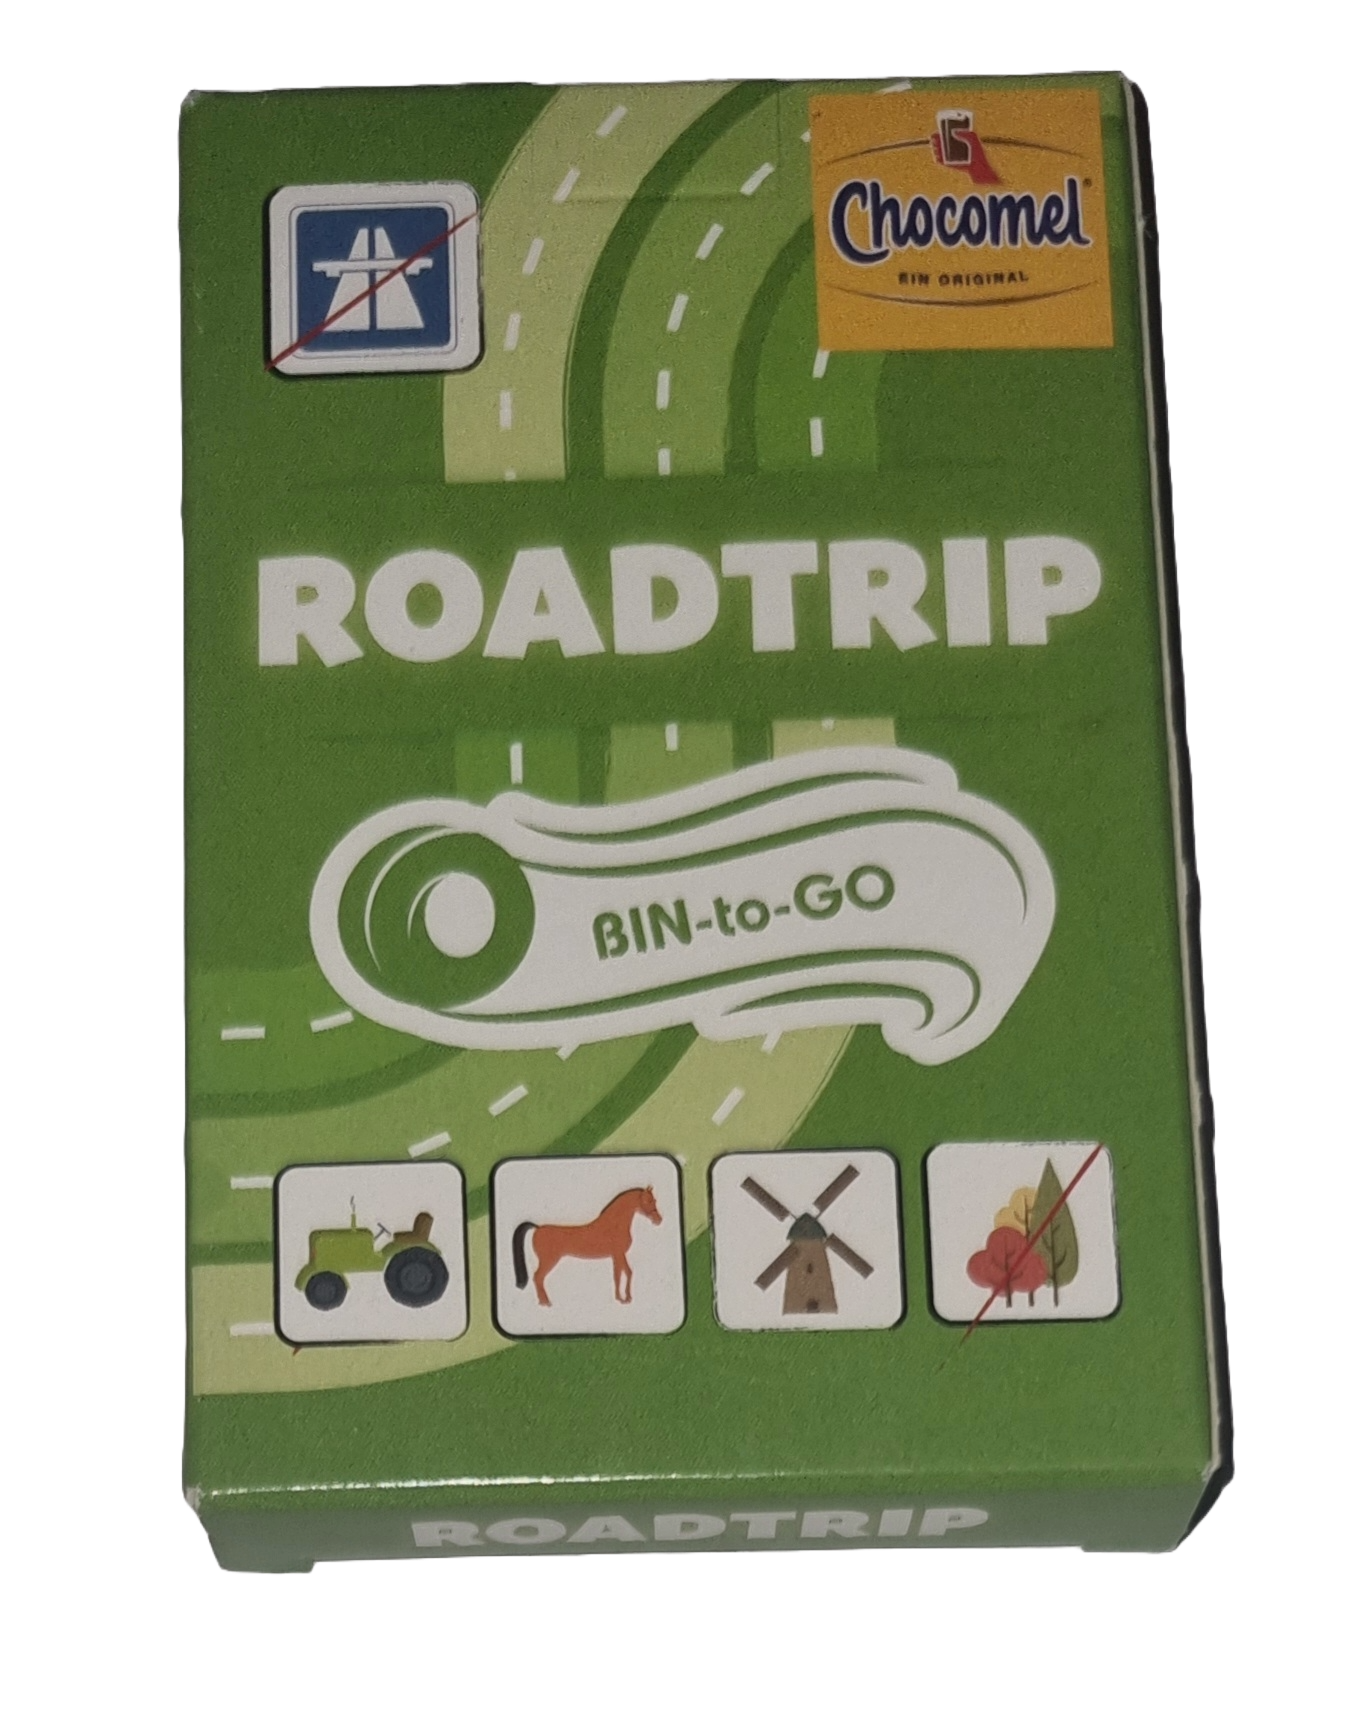 Chocomel Roadtrip Bin-to-Go